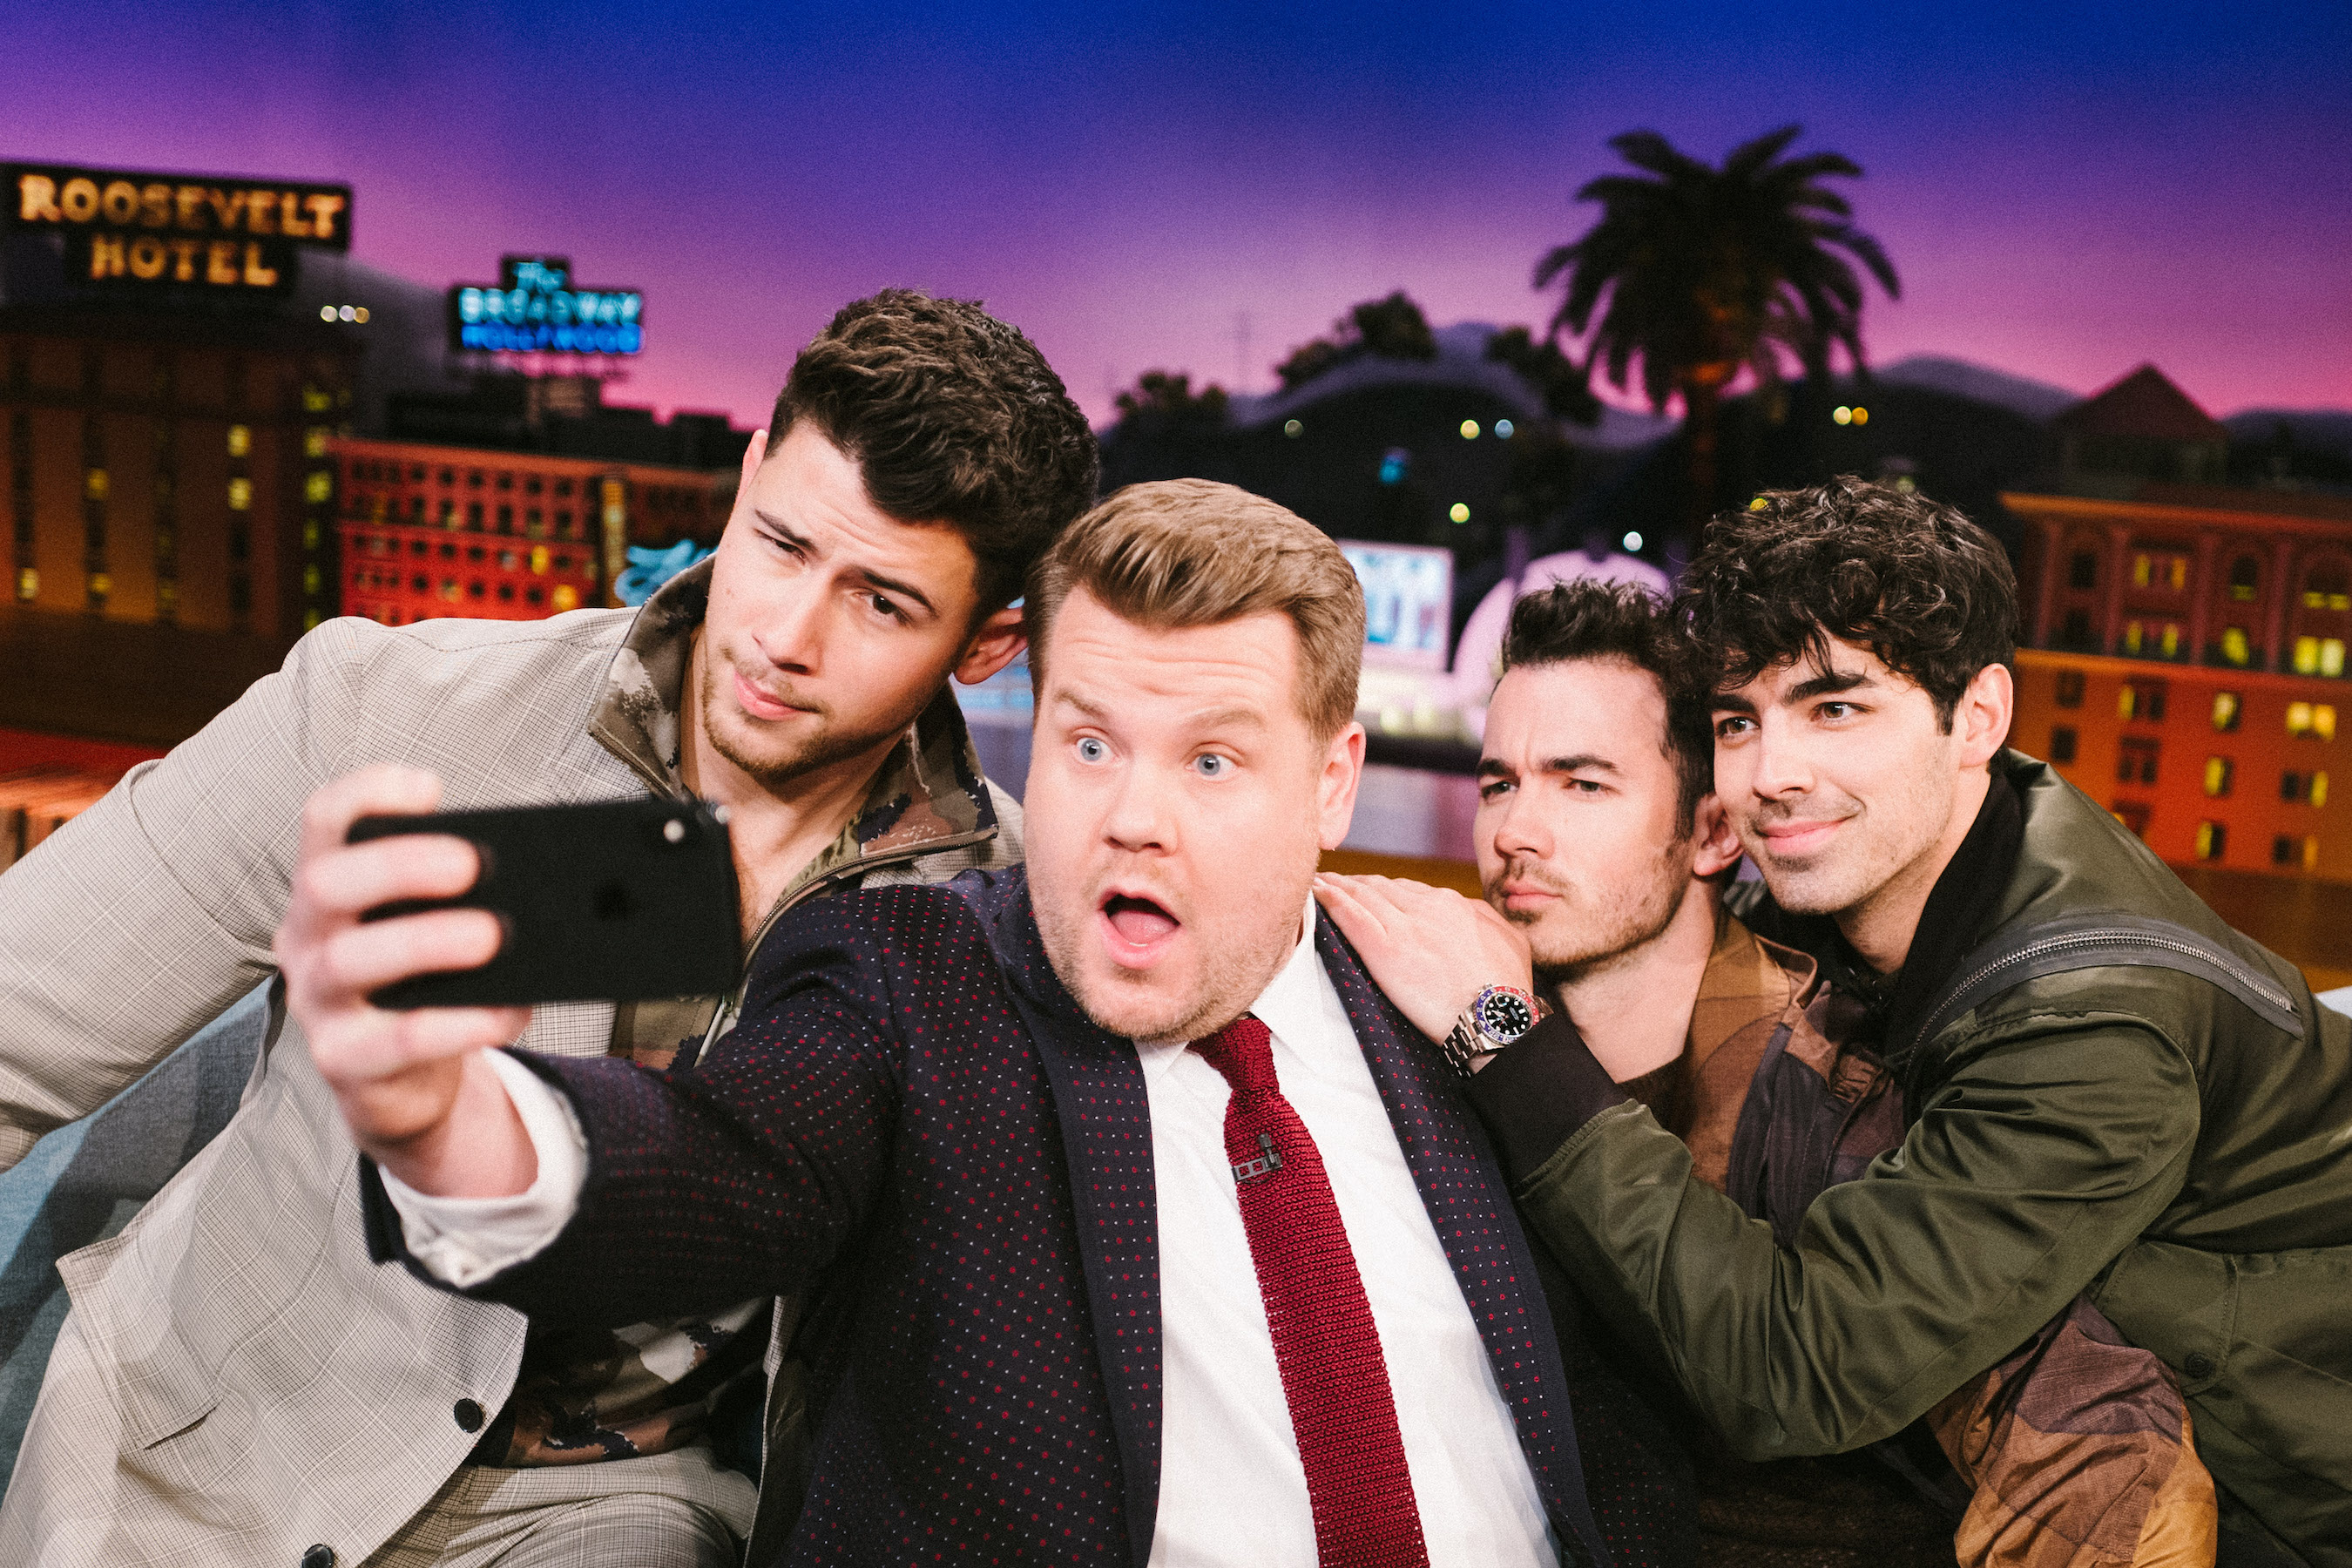 The Jonas Selfie